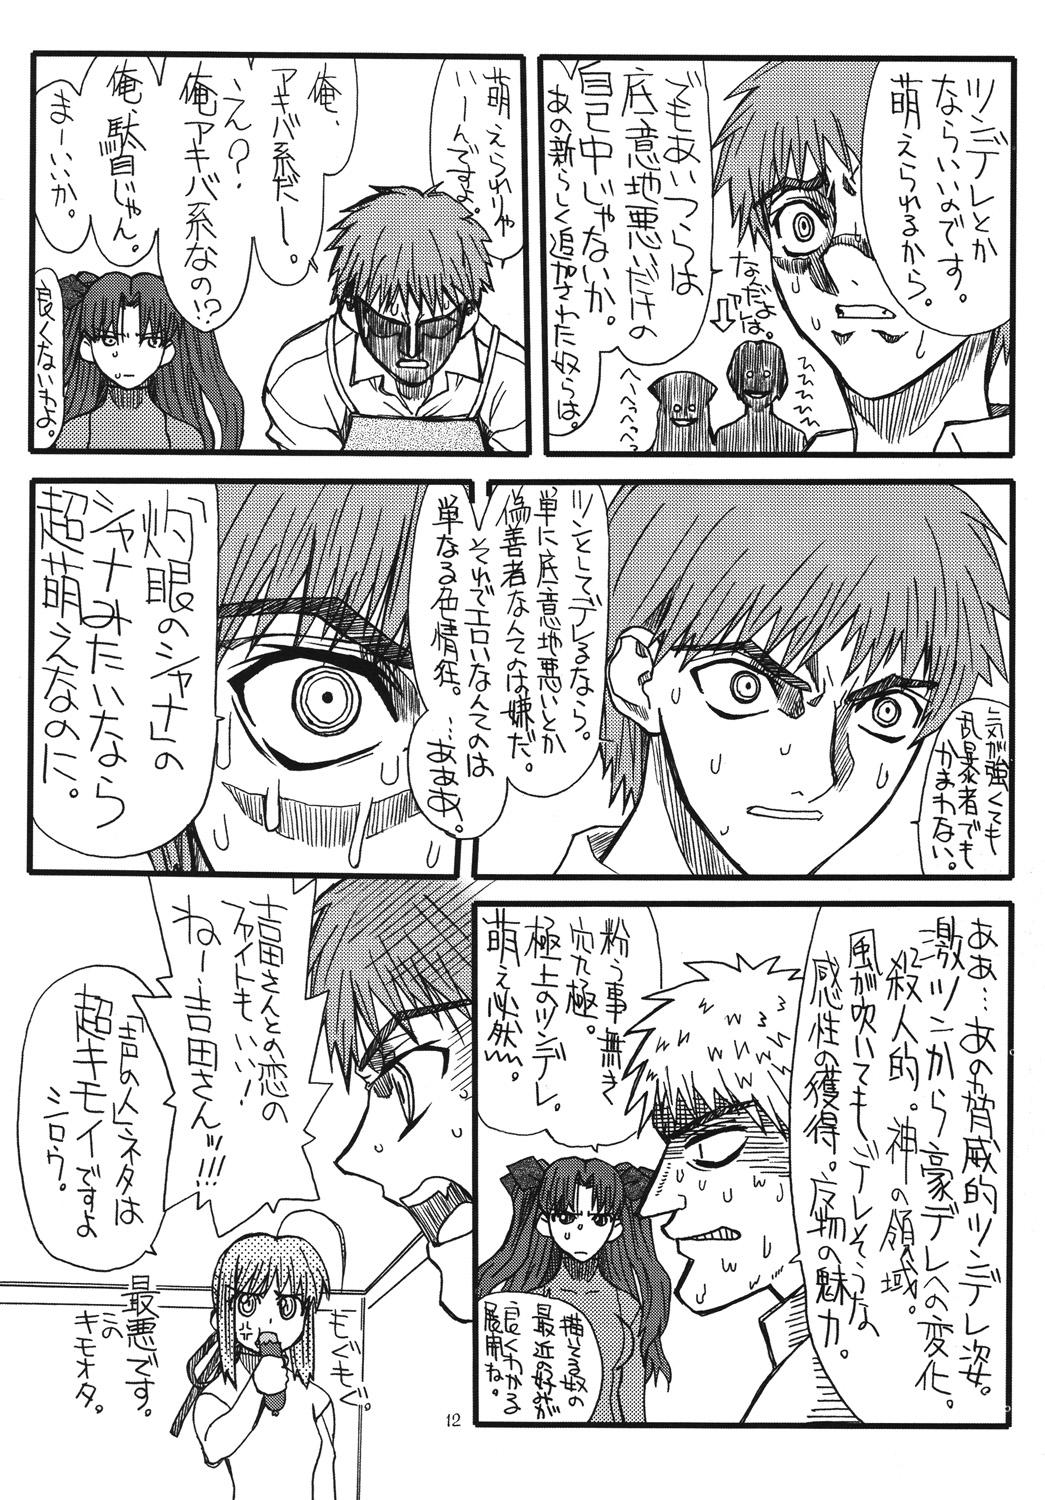 Story Kurenai Hoppe 2 - Fate stay night 8teenxxx - Page 11